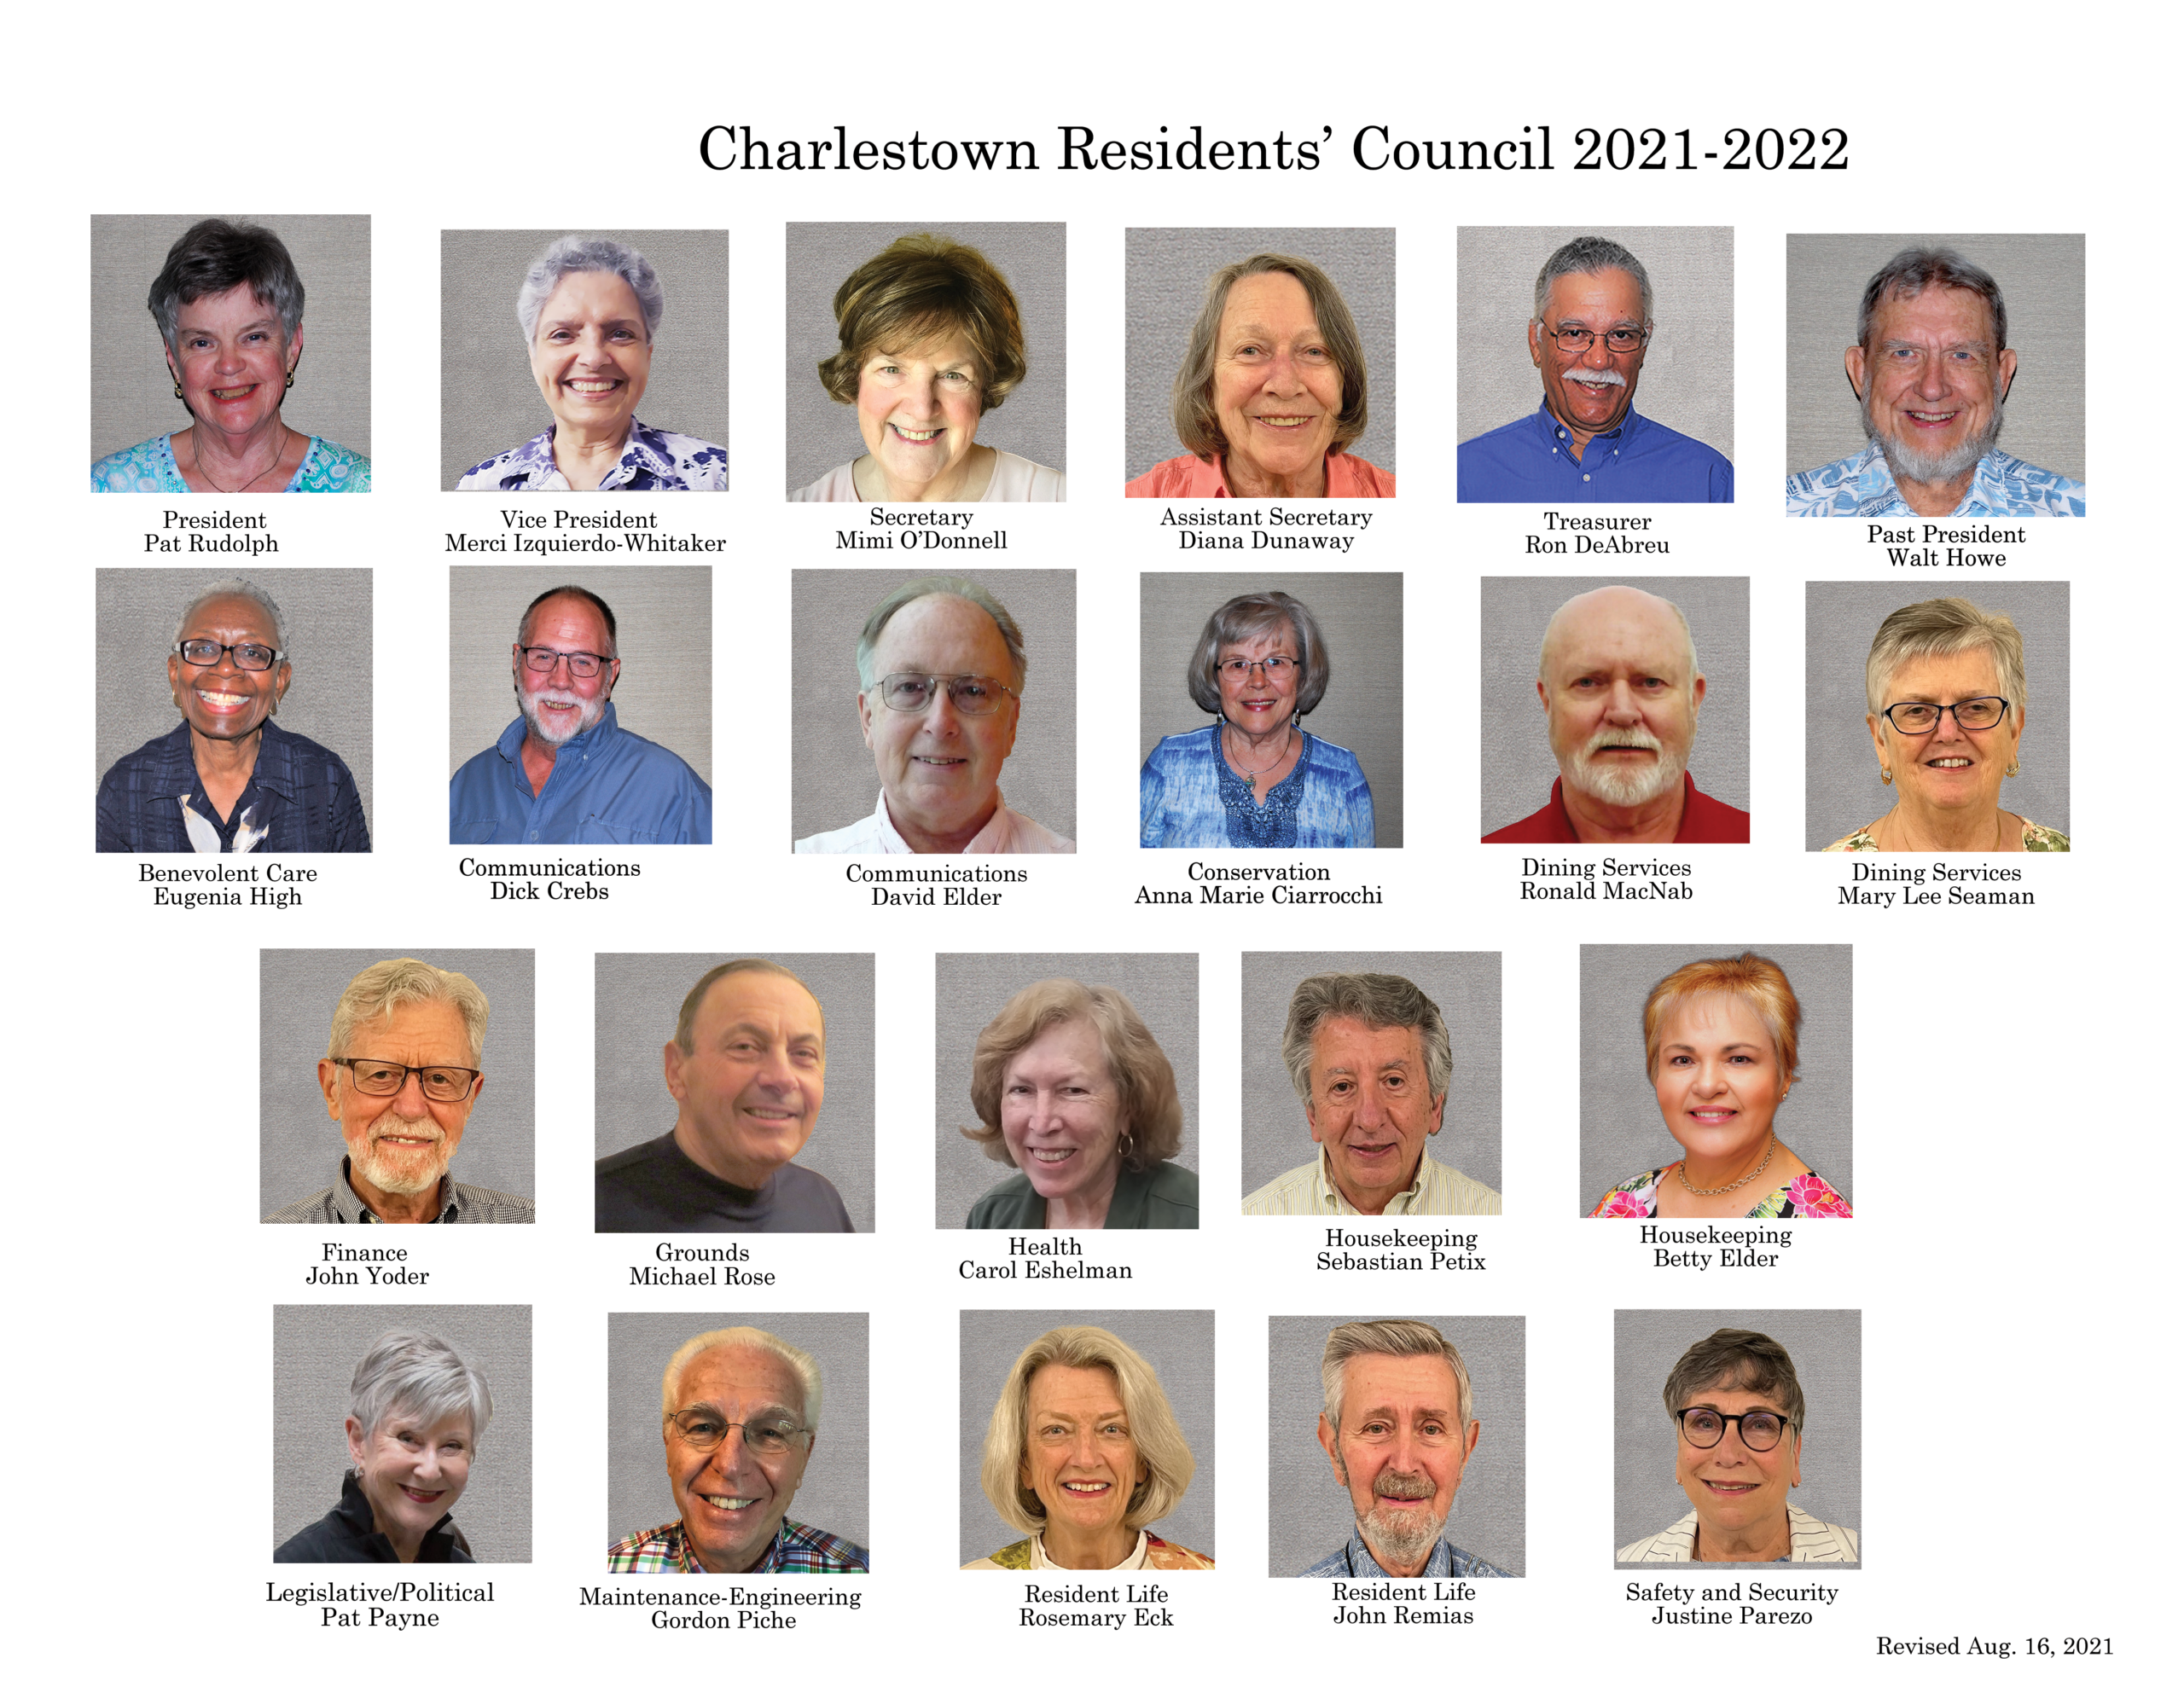 Res Council 2020-2021